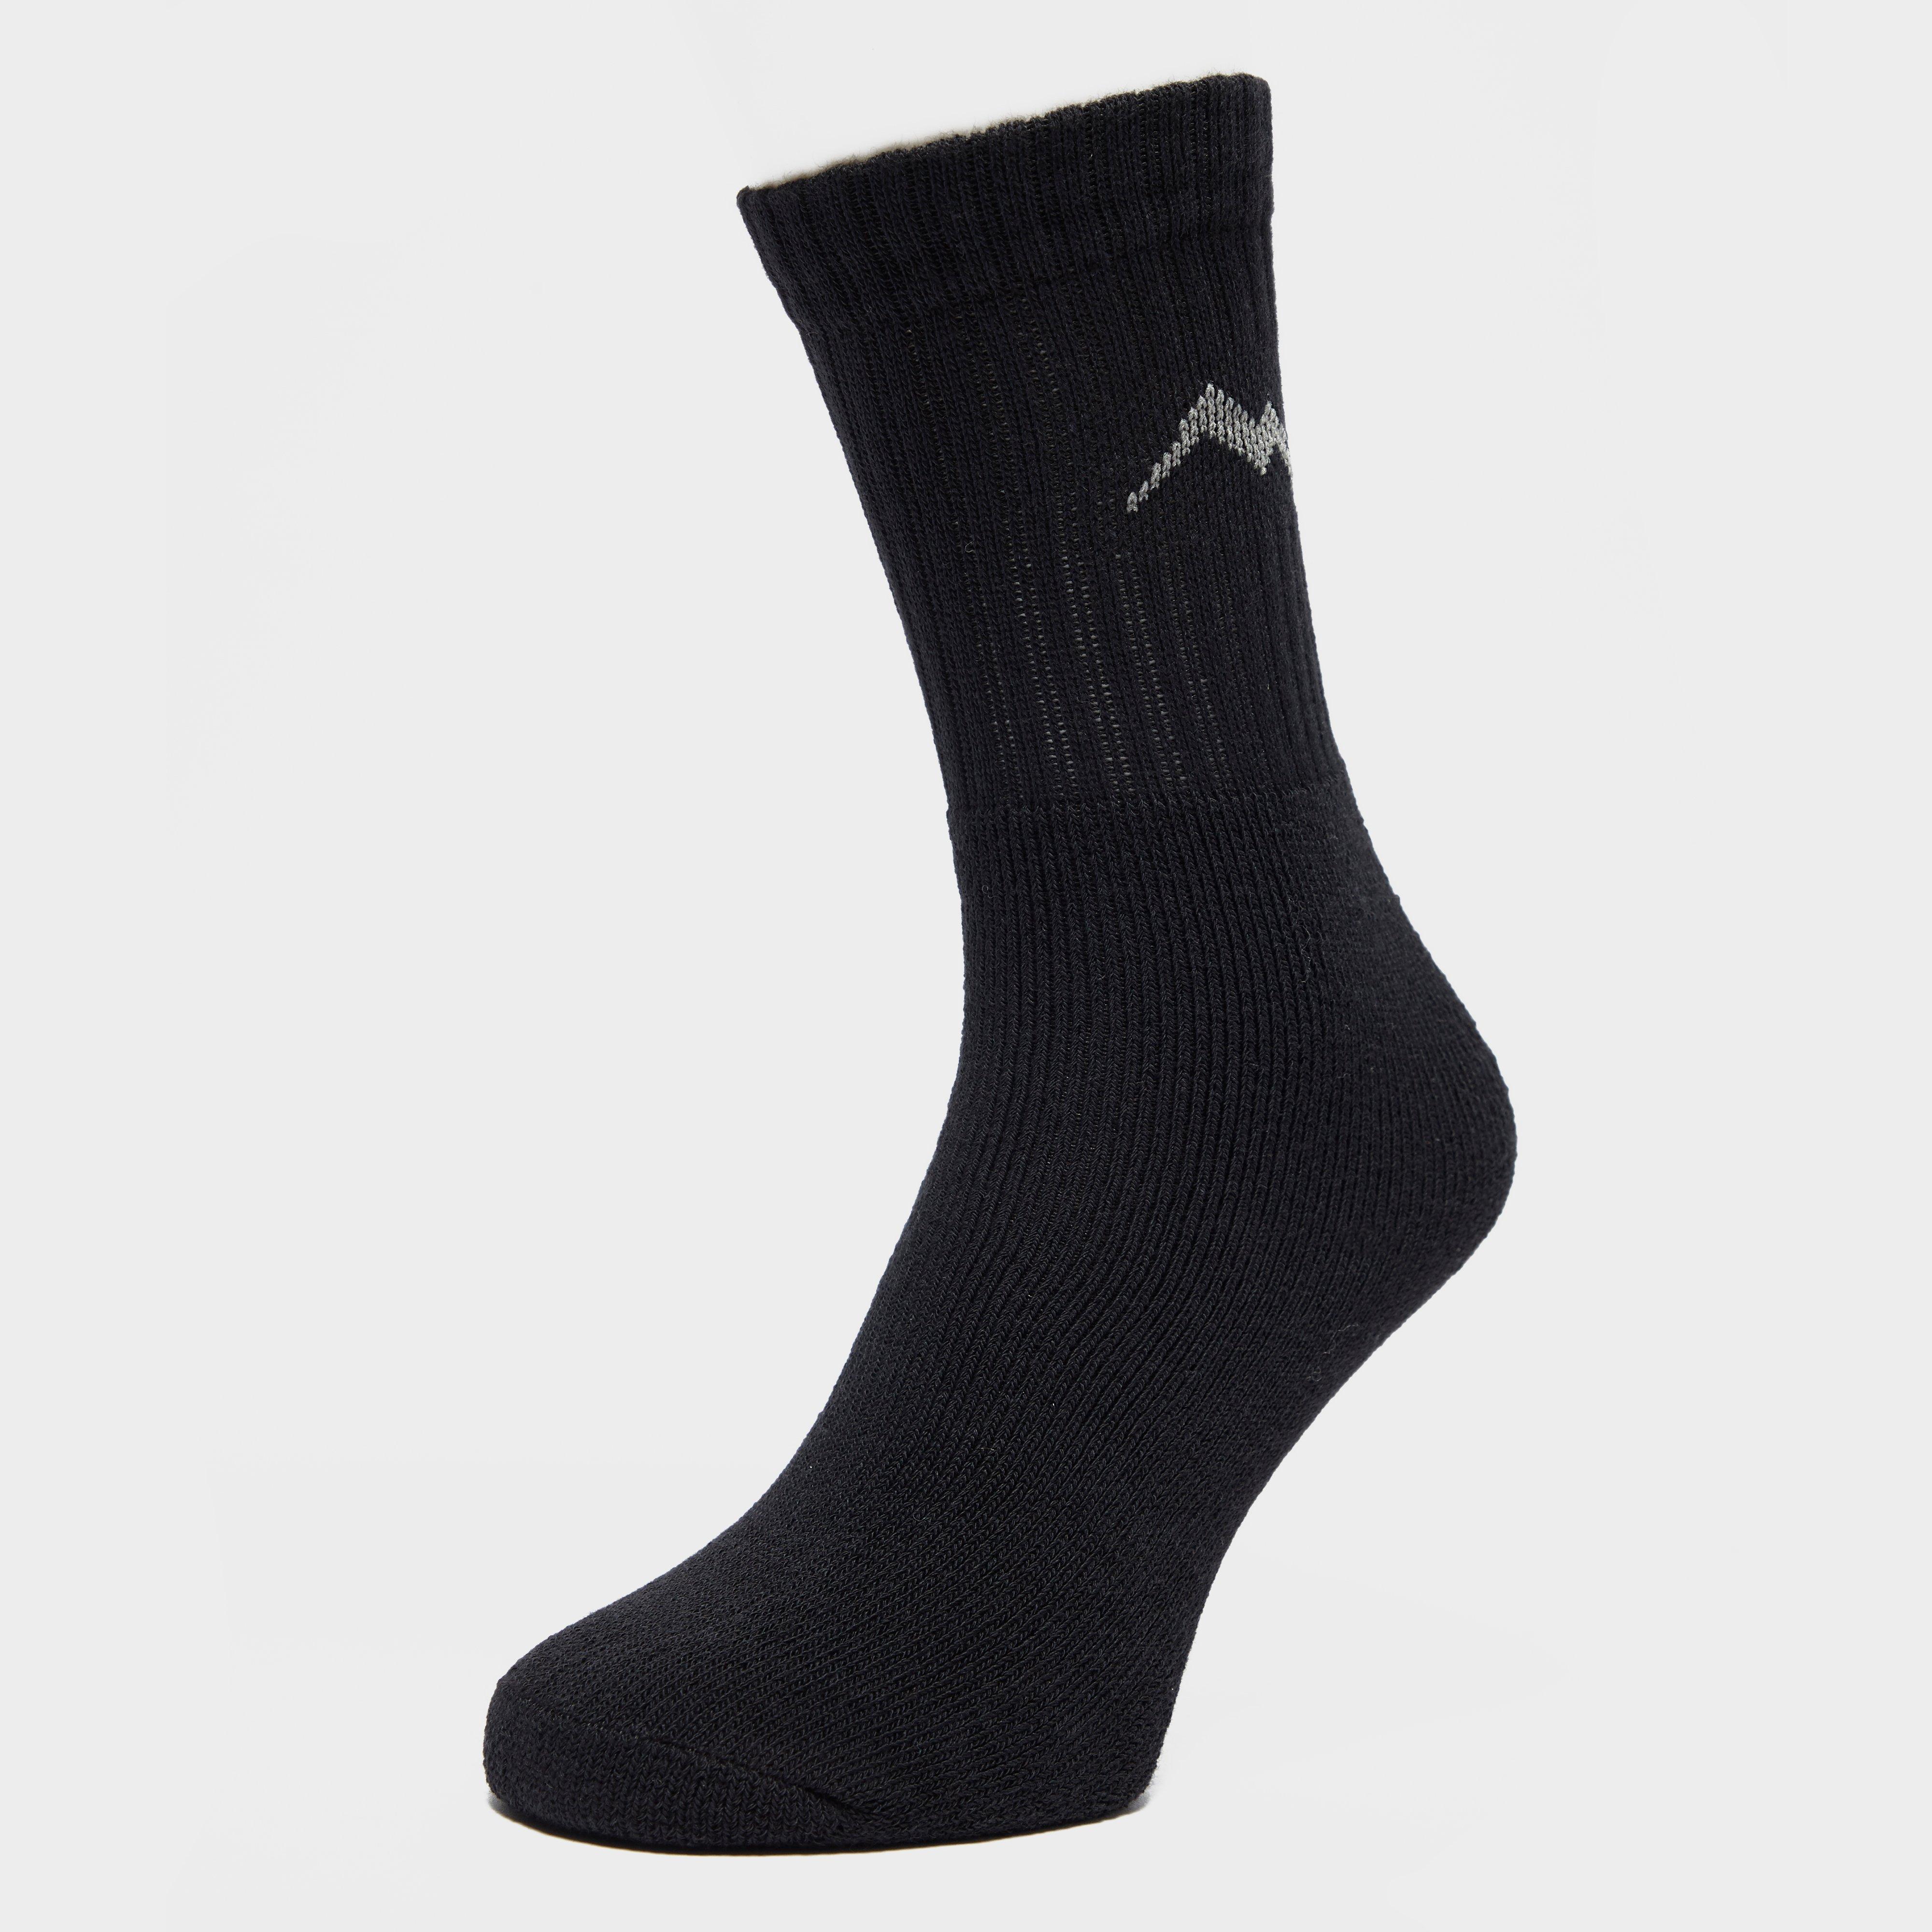 New Peter Storm Unisex Multiactive Coolmax Liner Socks